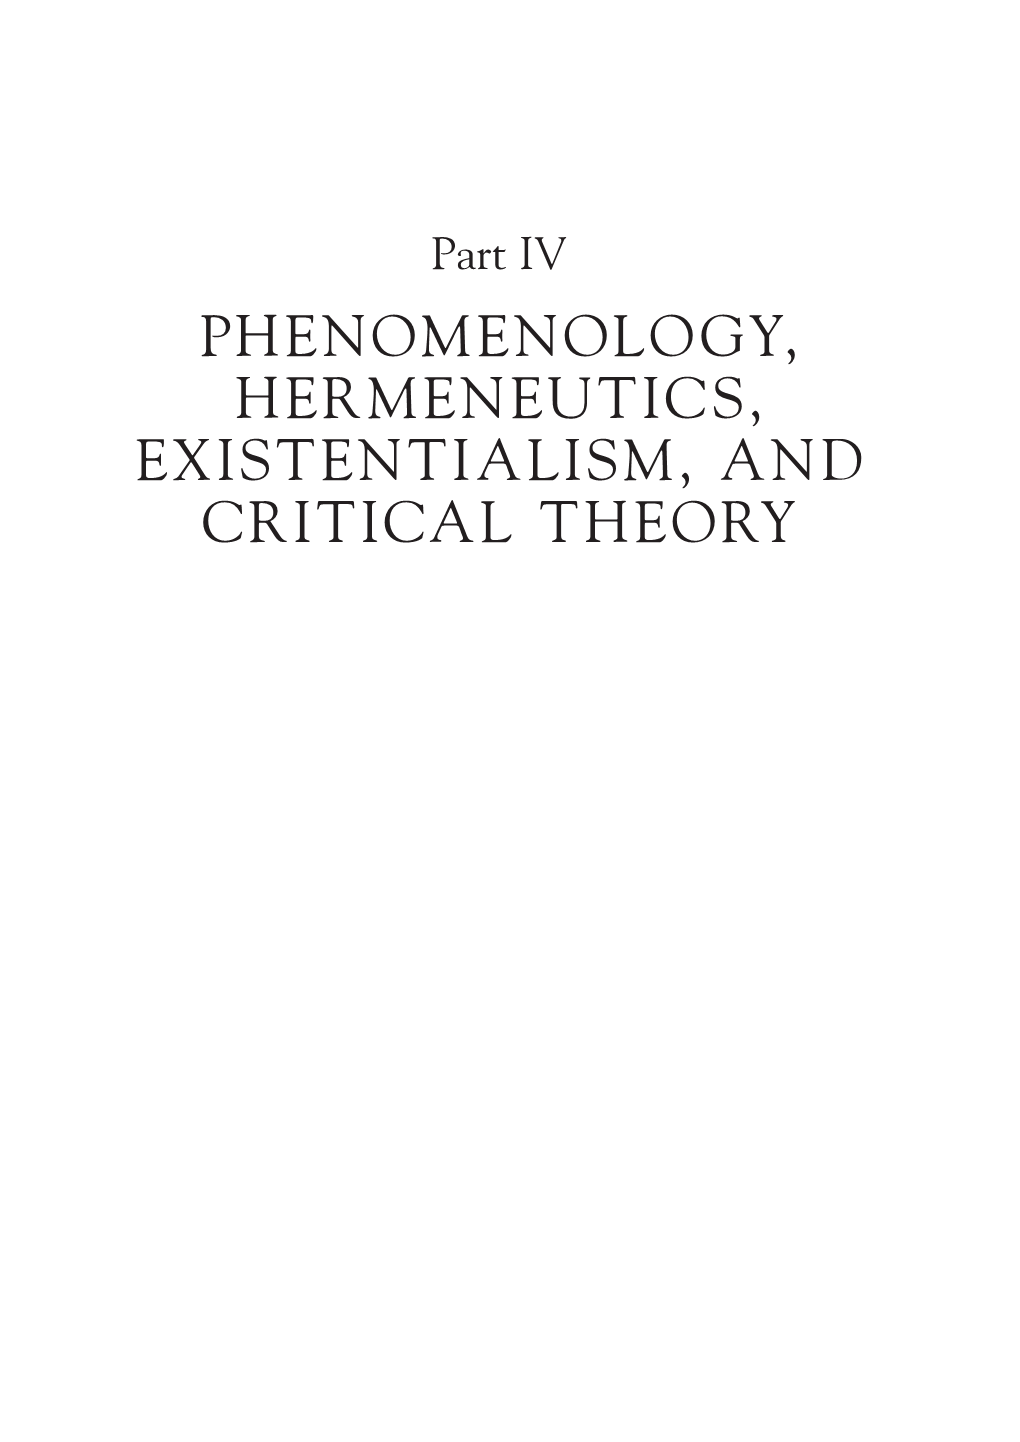 Phenomenology, Hermeneutics, Existentialism, and Critical Theory